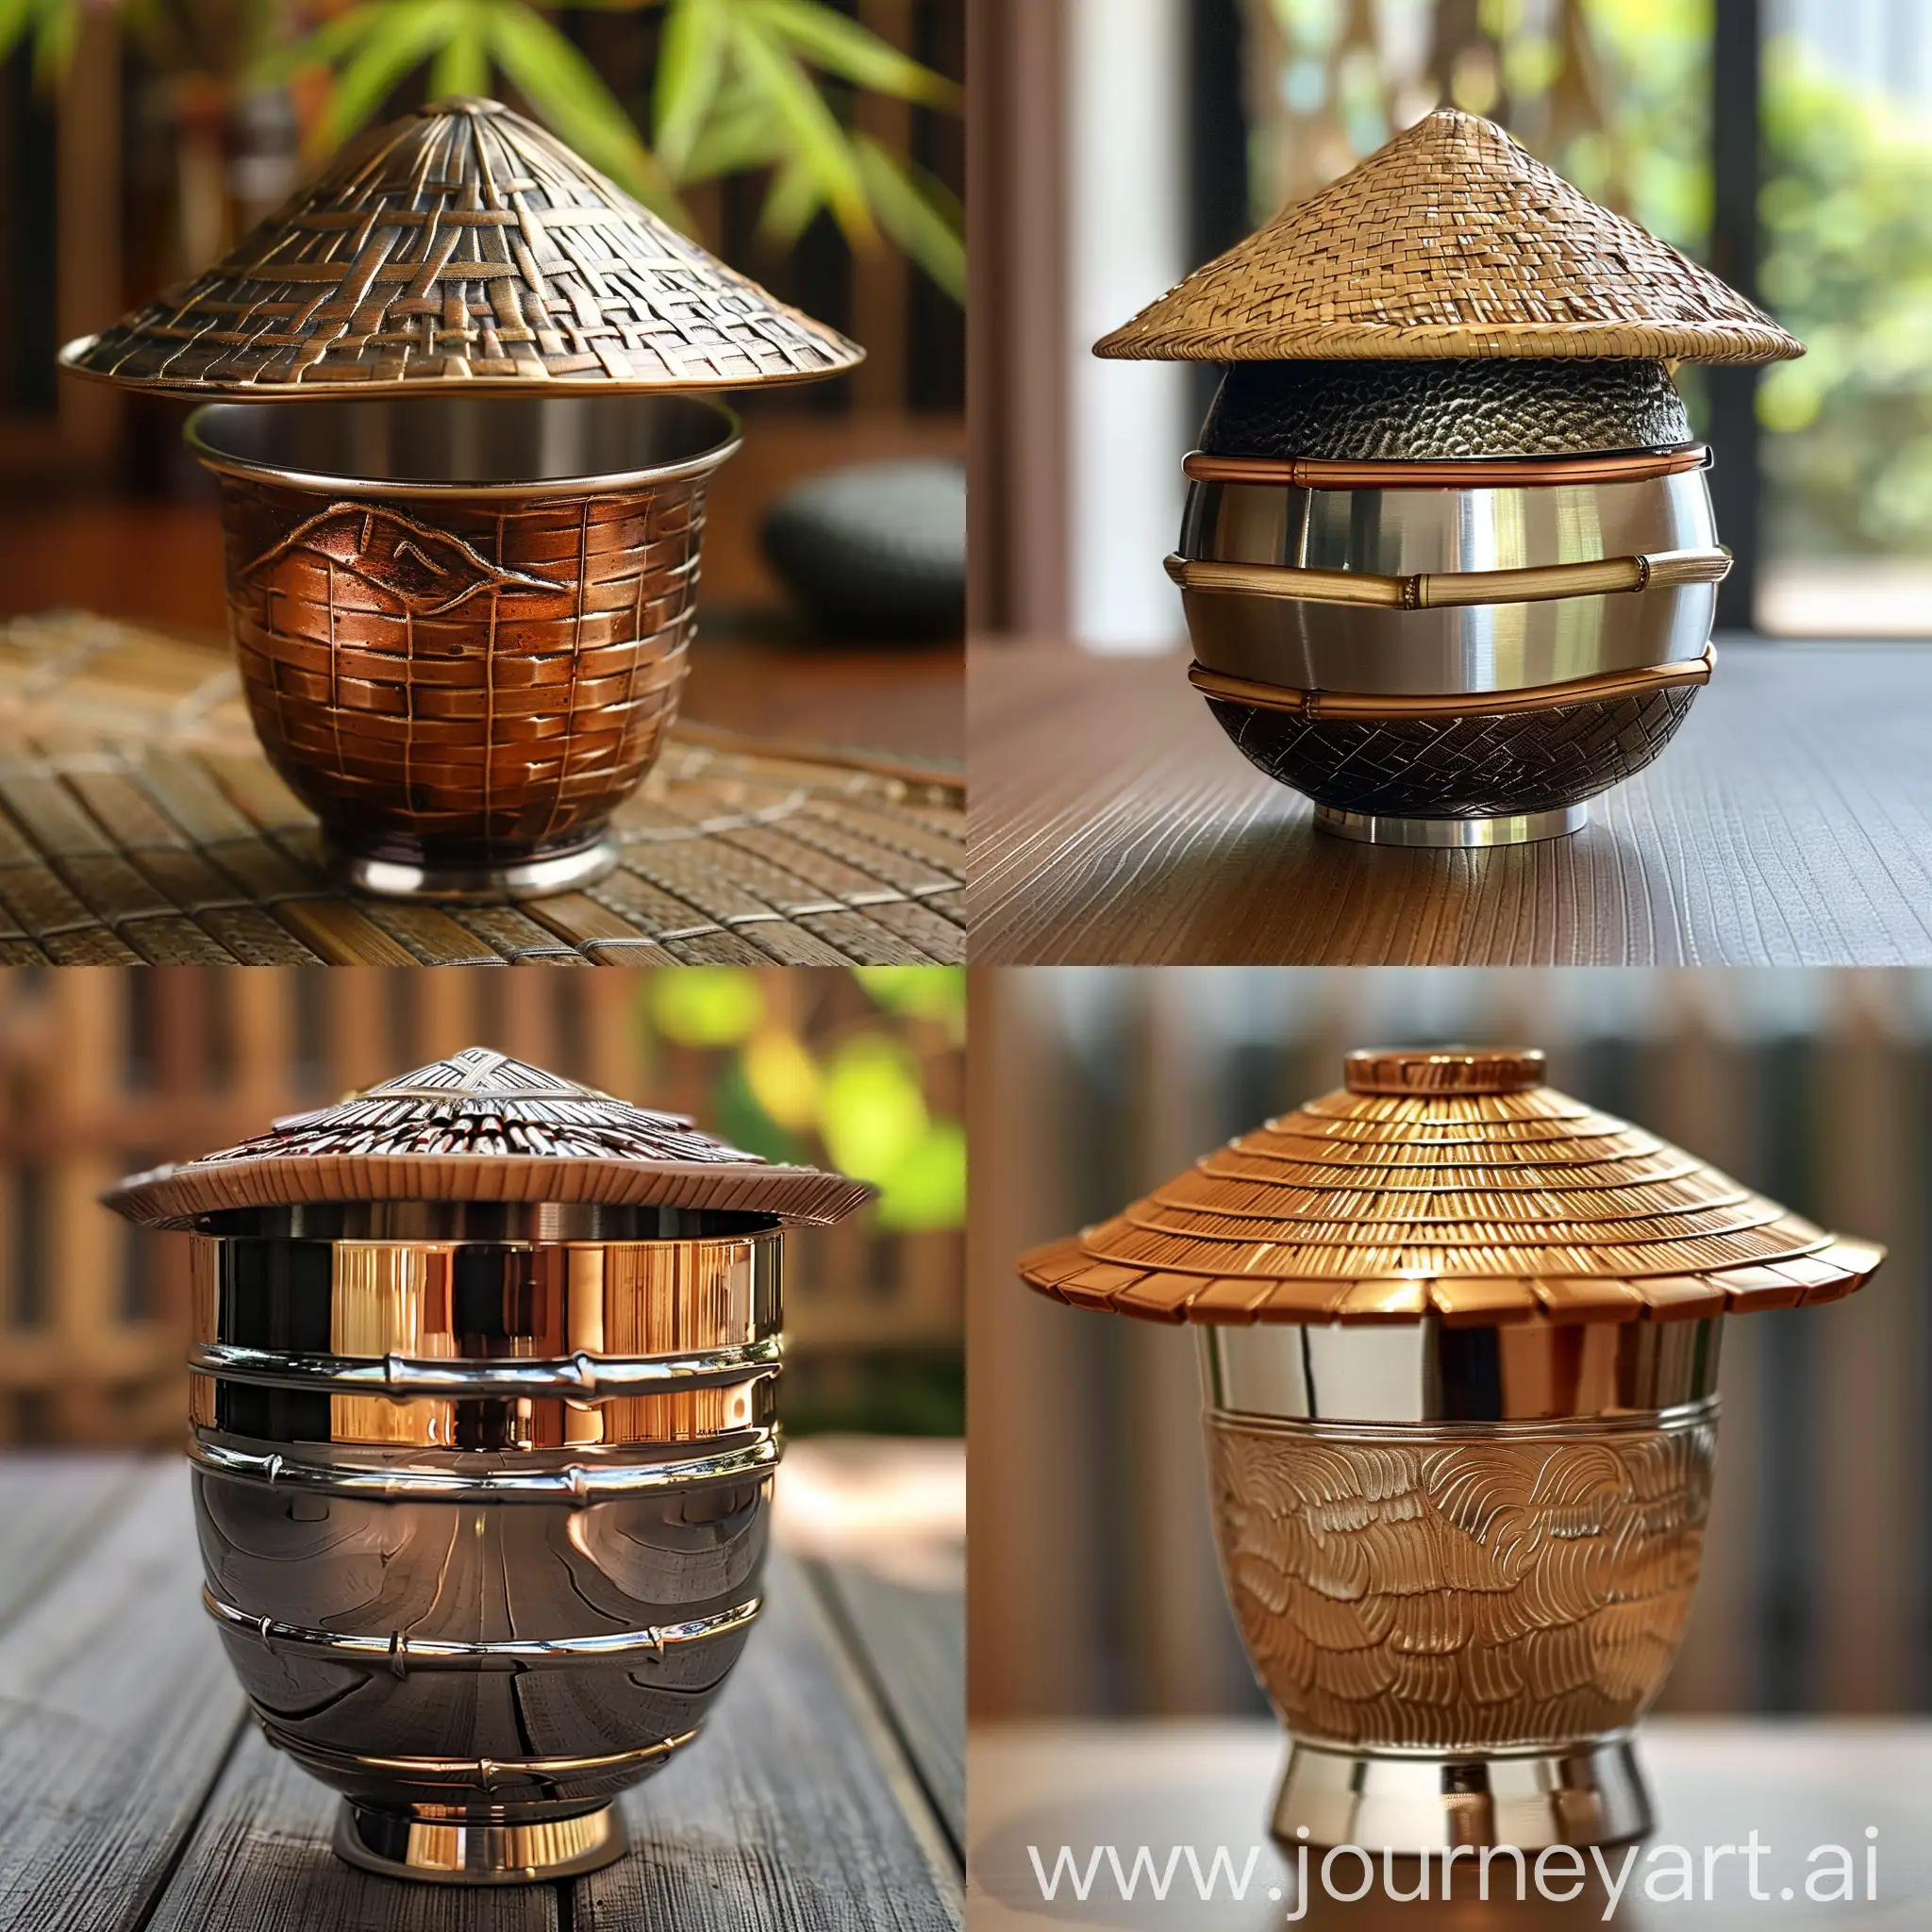 Stainless-Steel-Kuai-Ke-Cup-with-Bamboo-Hat-Design